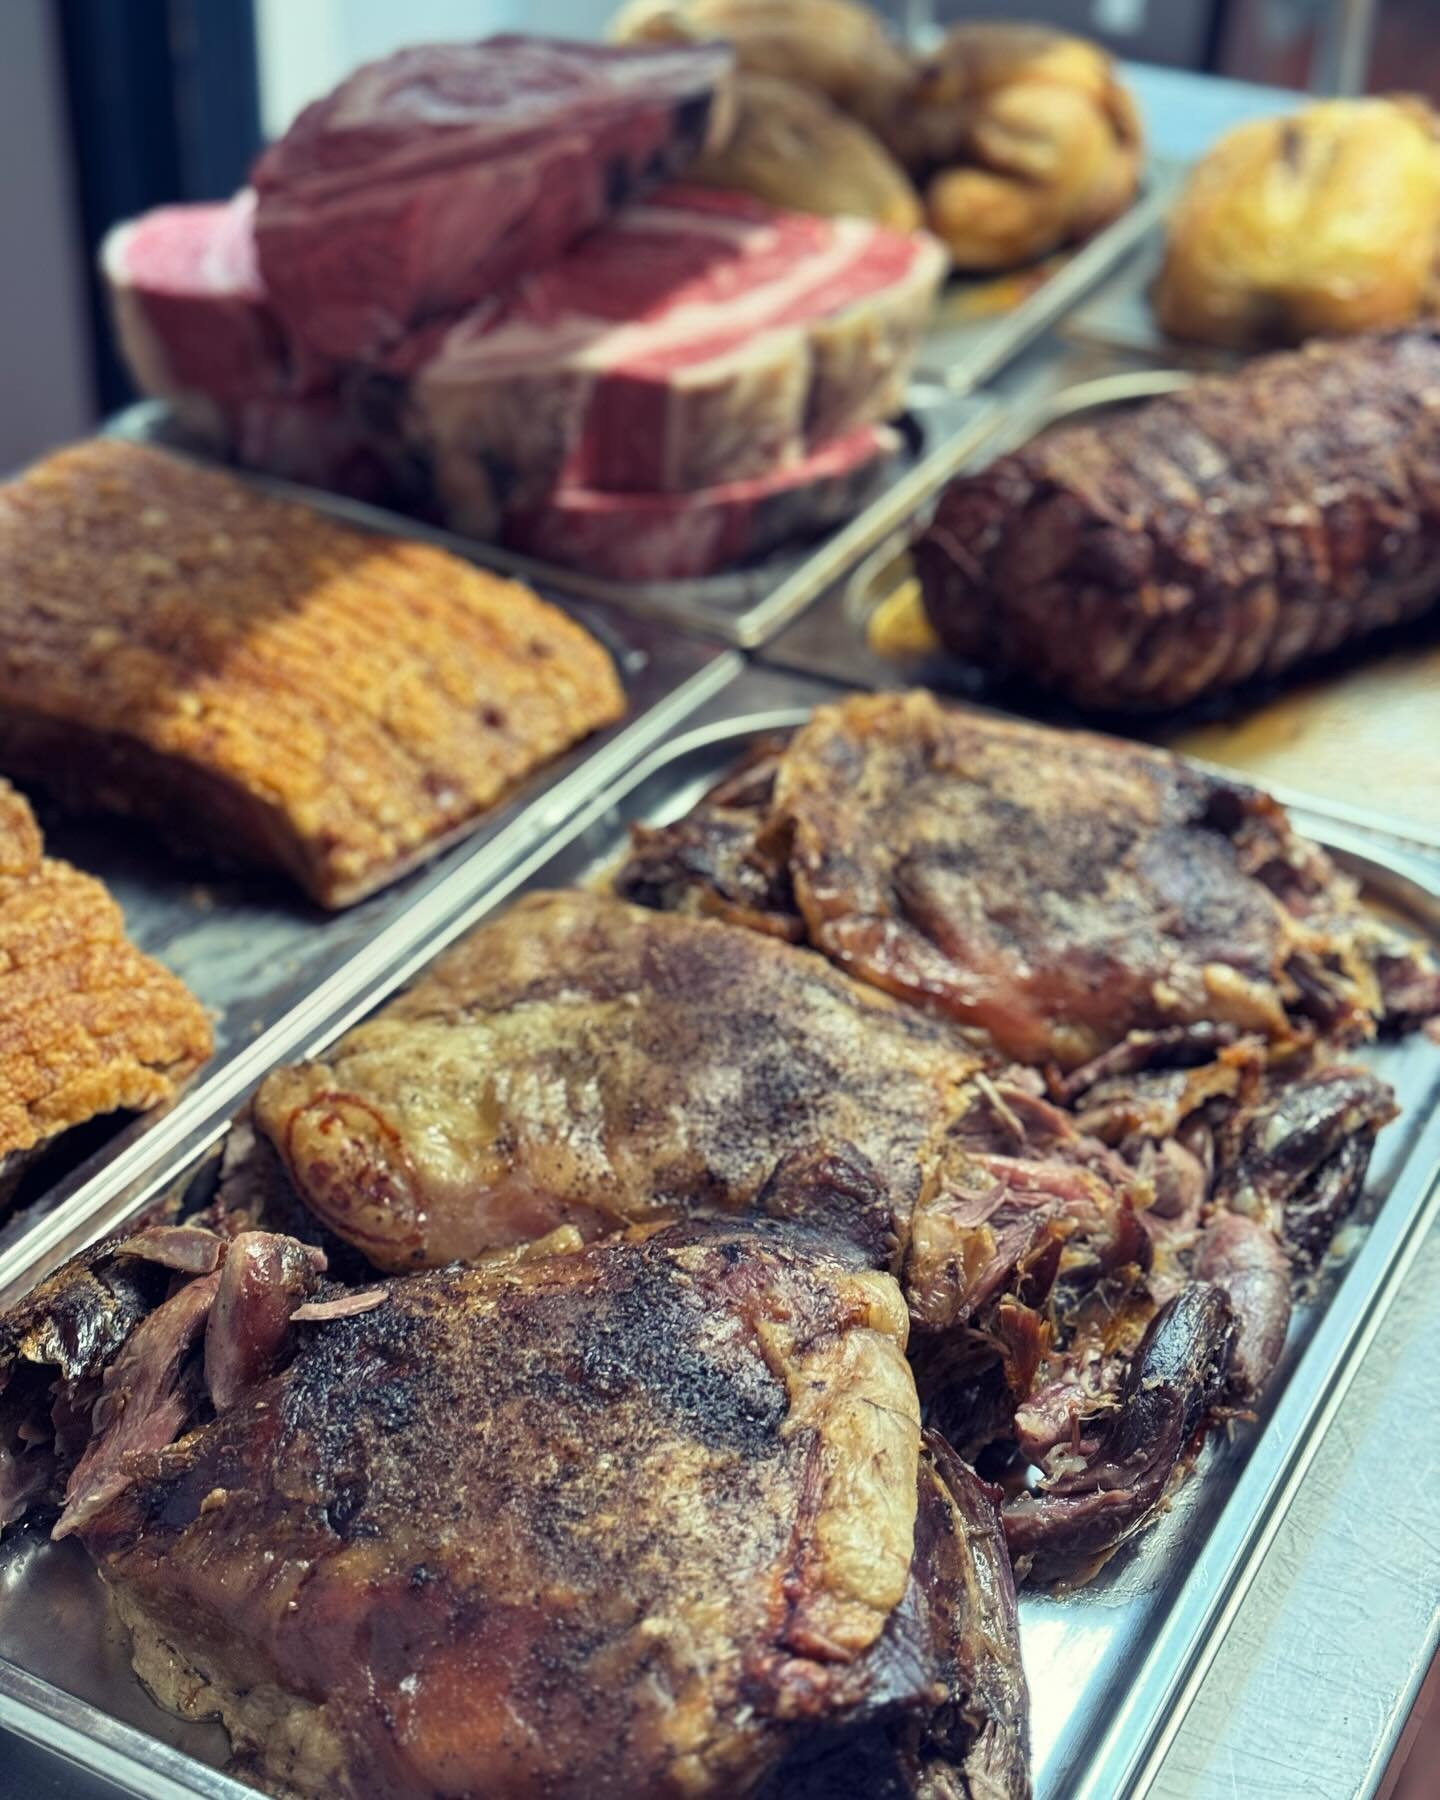 Sunday lunch anyone ? 

#roastbeef #roastchicken #roastpork #roastlamb #sundayroast #sundaylunch